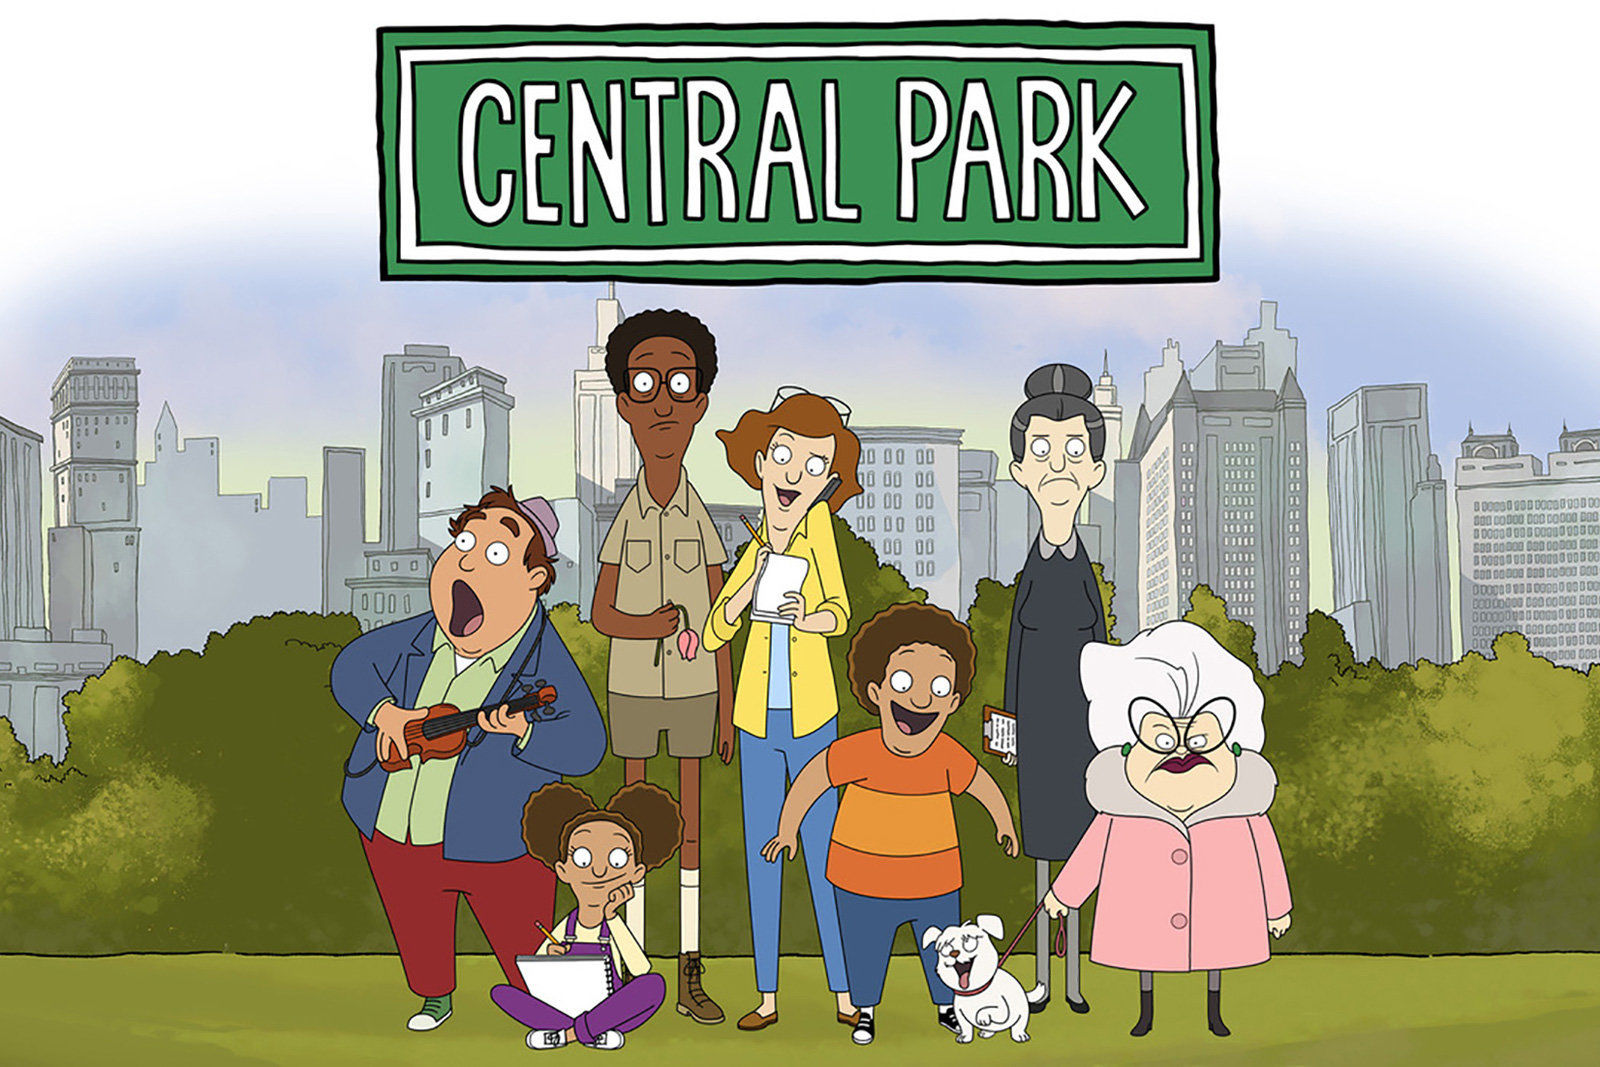 Apple TV+のコメディアニメ『Central Park』発表。2020年夏に配信開始